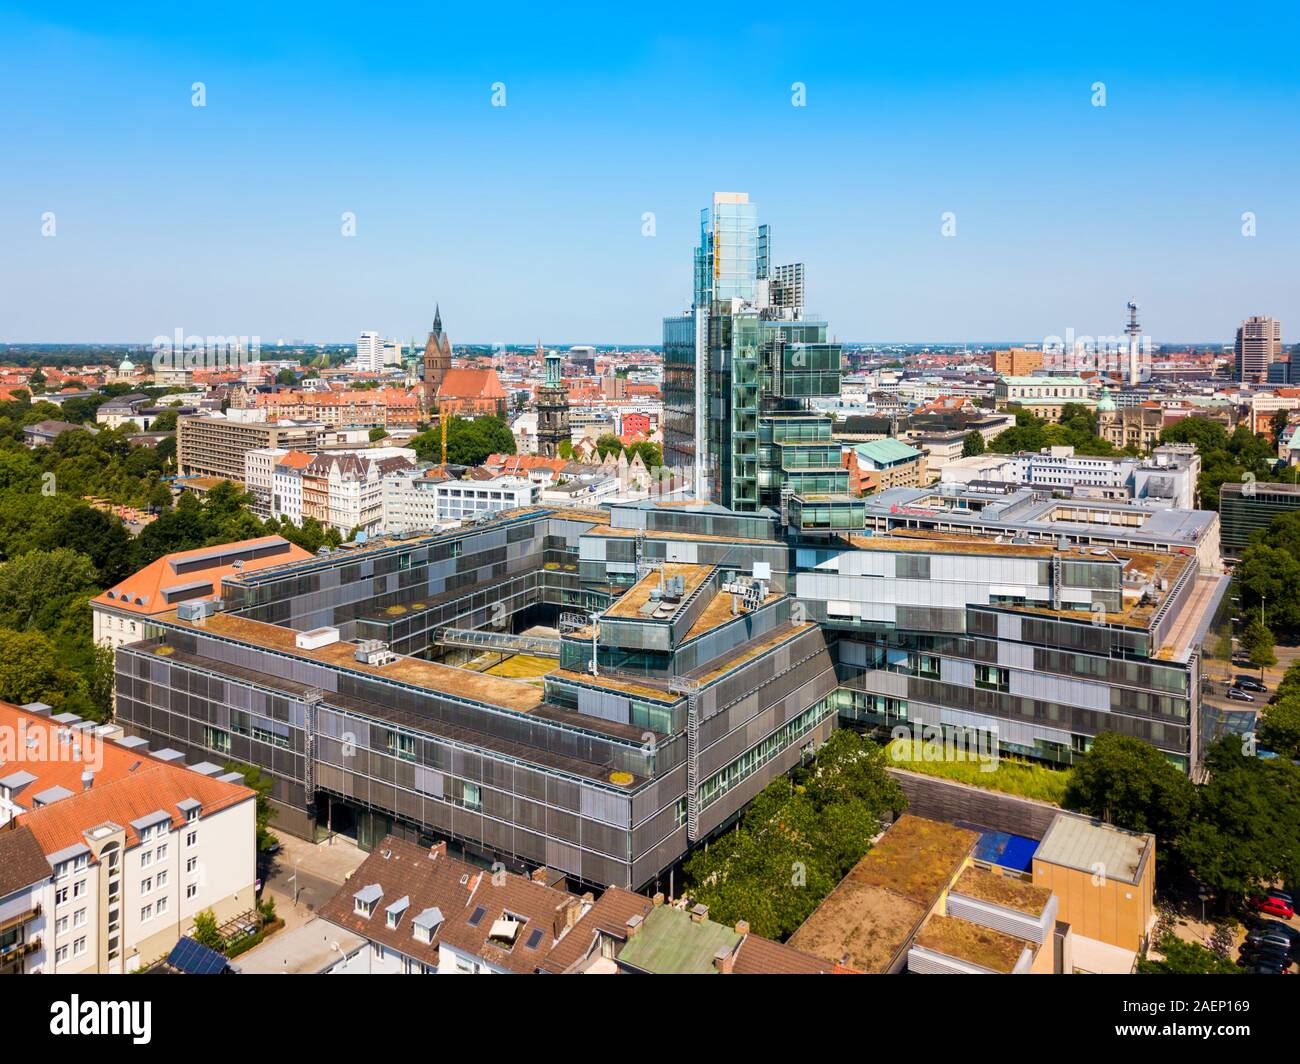 HANNOVER, GERMANY - JULY 05, 2018: North German Landesbank or Norddeutsche Landesbank Girozentrale in Hannover, Germany Stock Photo